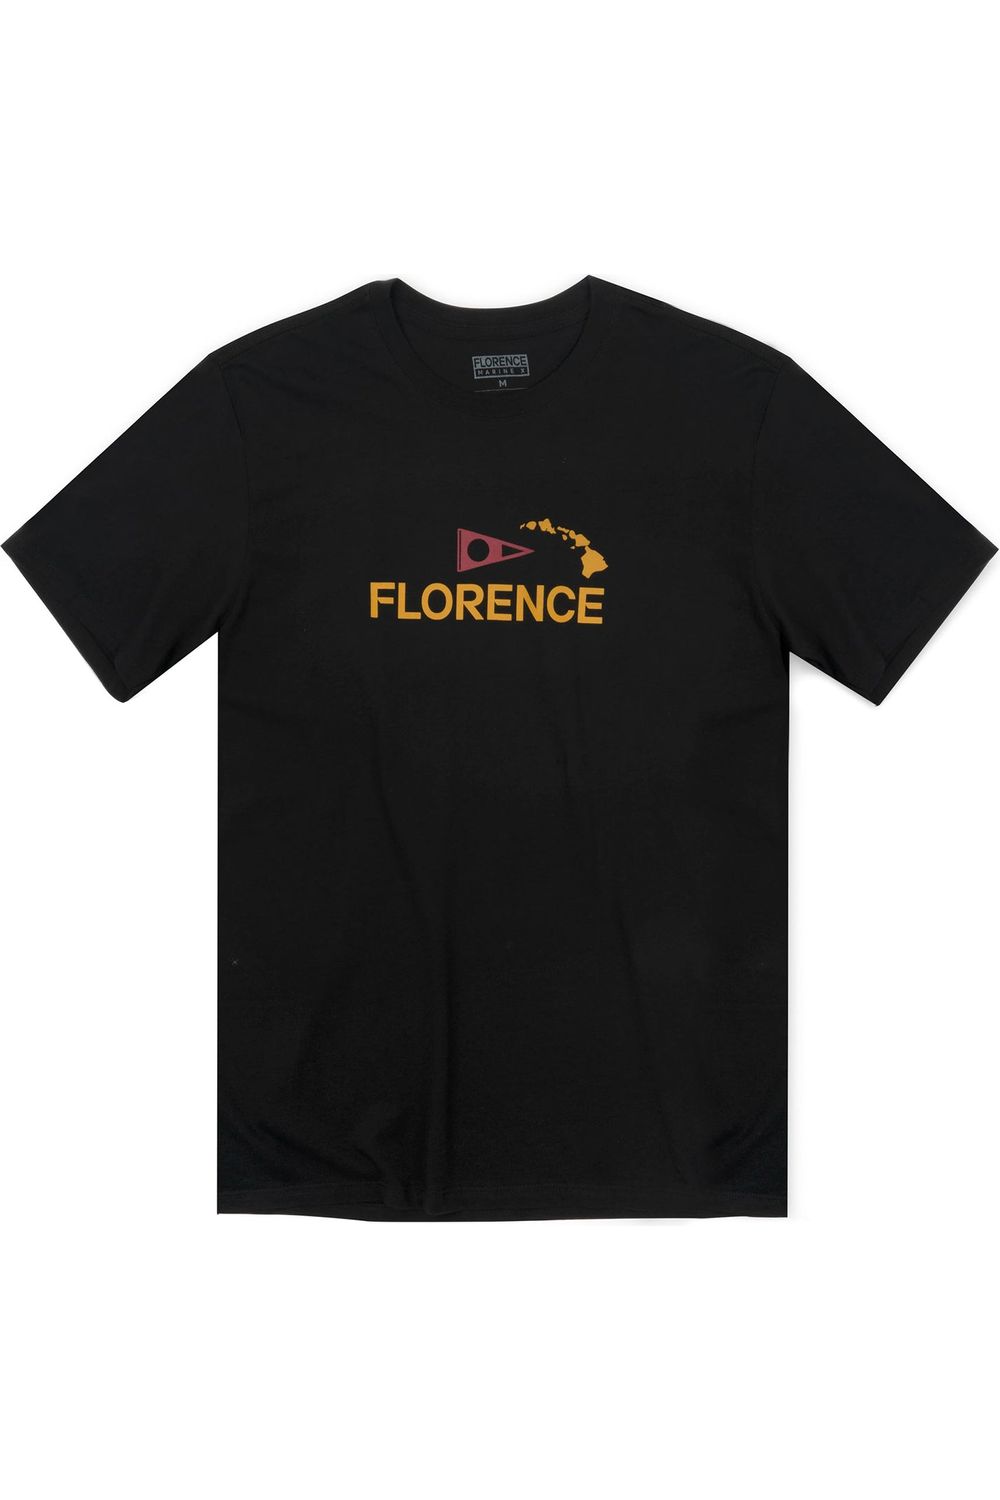 Florence Marine X Logo Island Chain T-Shirt Black